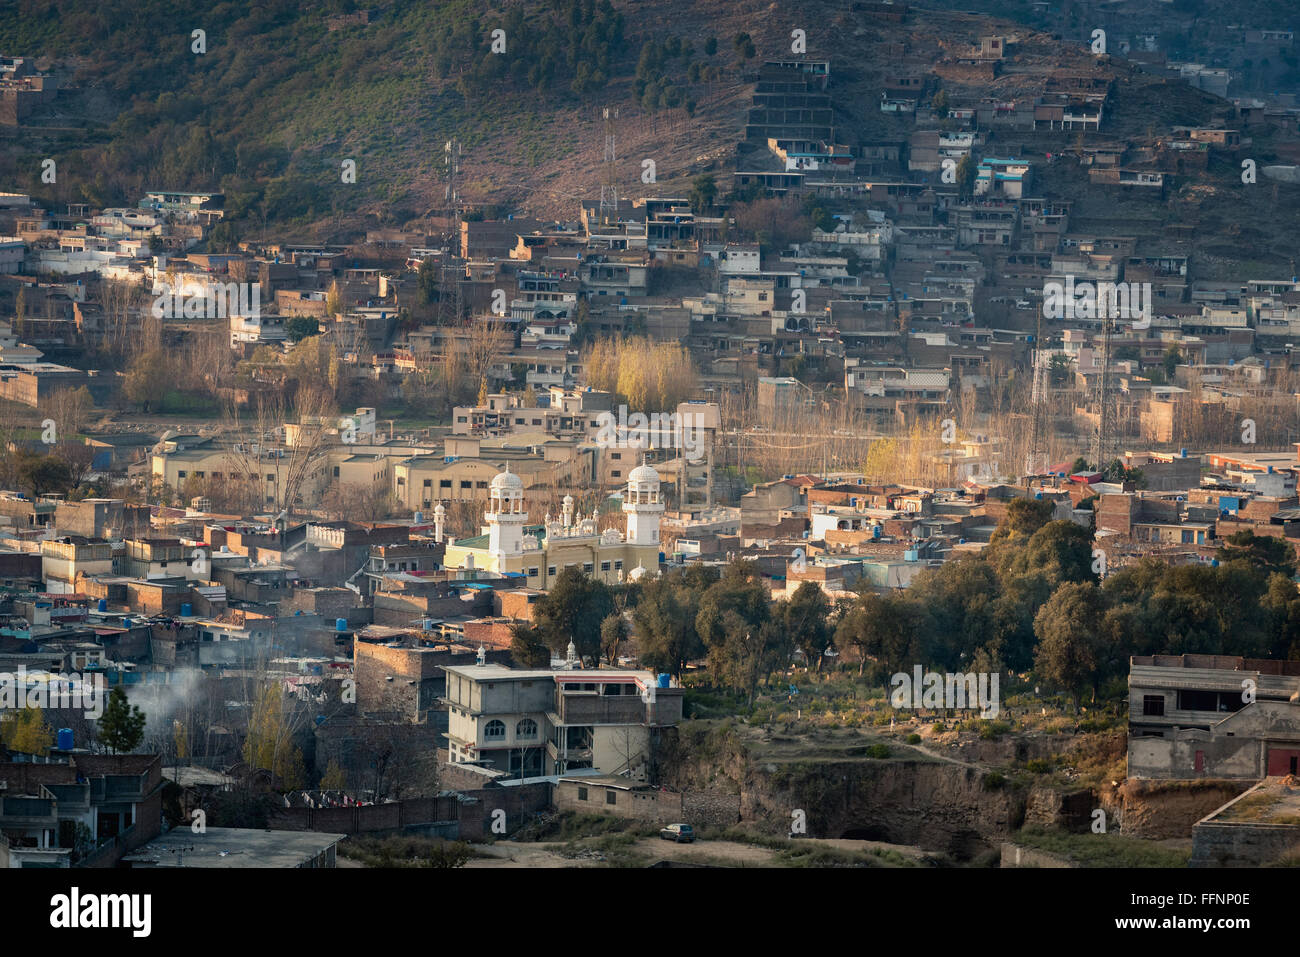 Aerial view of Mingora city in Swat district, Pakistan. Stock Photo